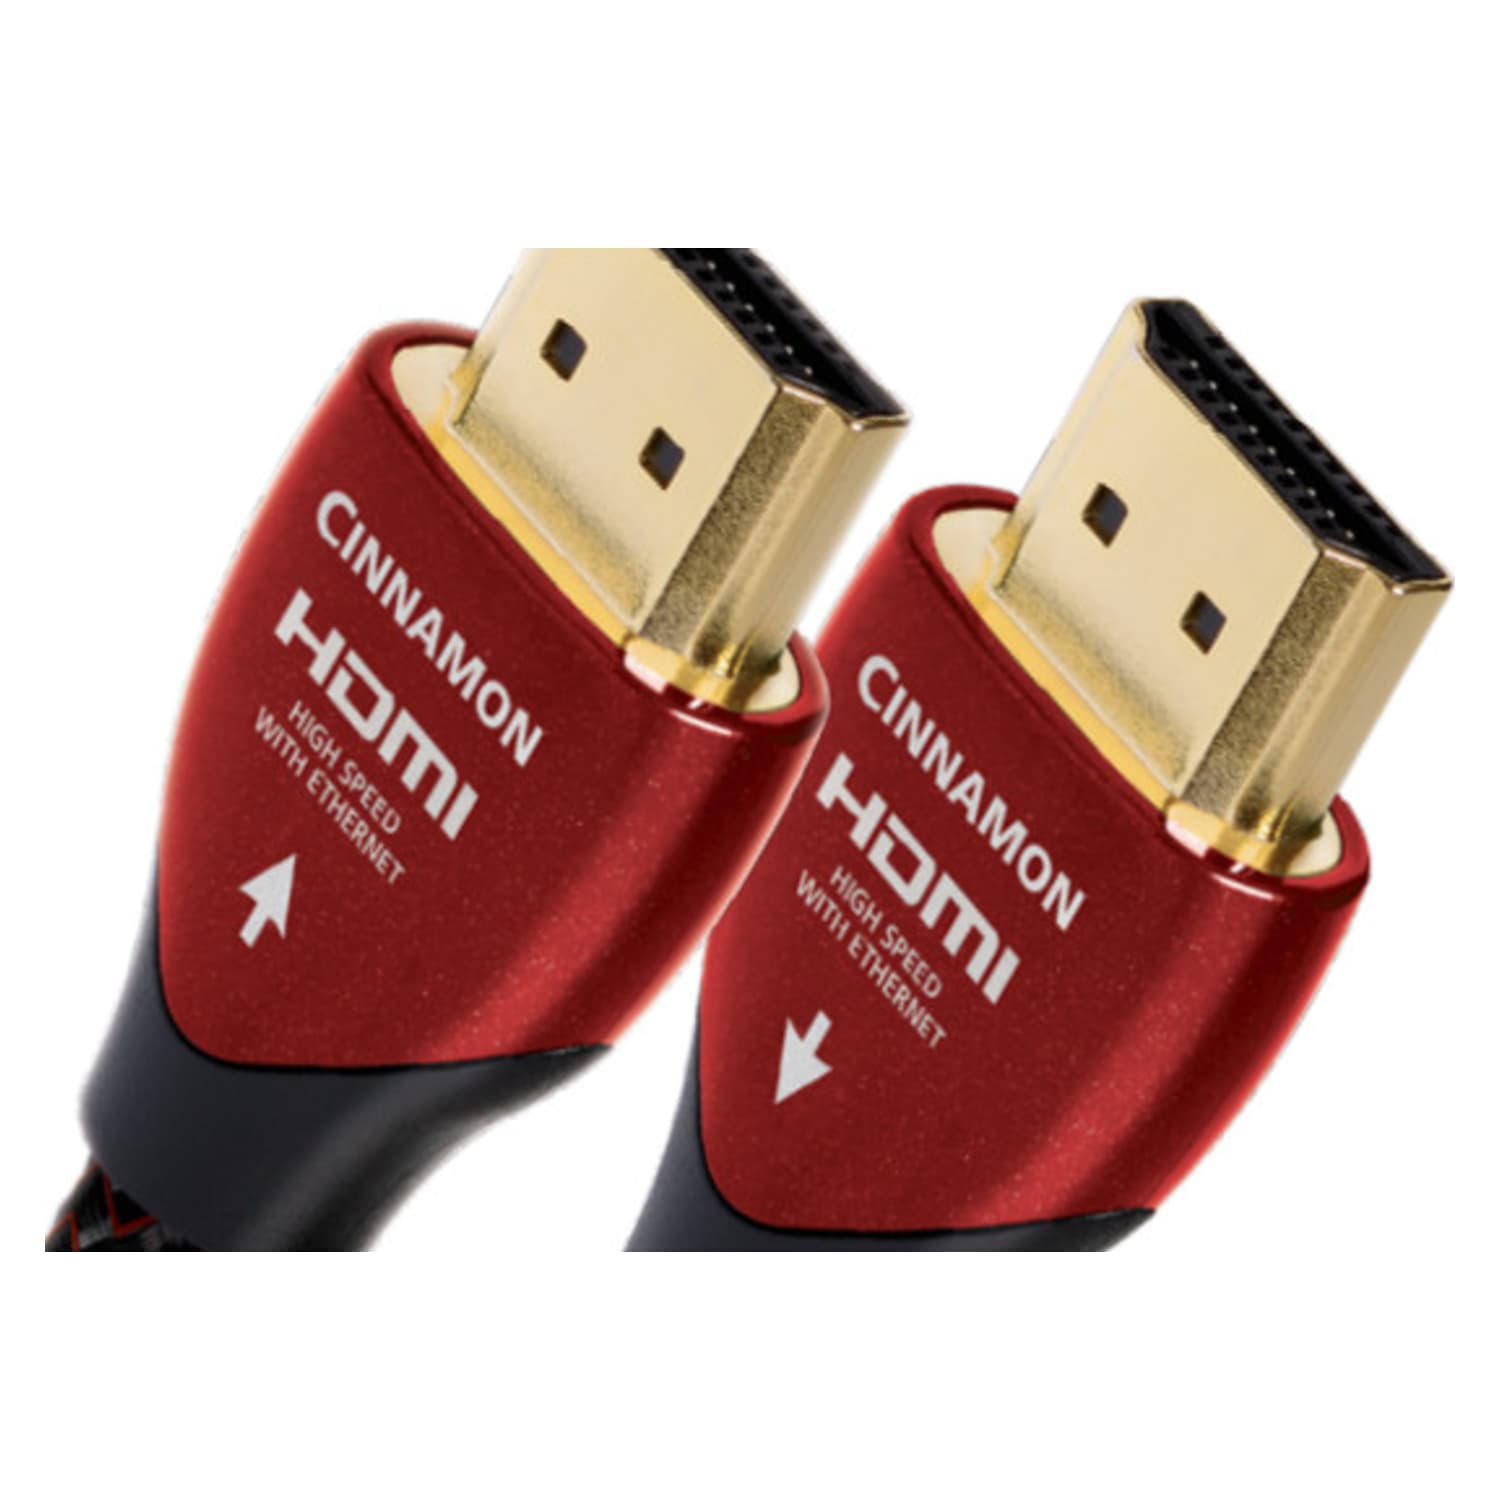 AudioQuest High Speed UHD 4K HDMI Cable - Cinnamon (HDMICIN03)